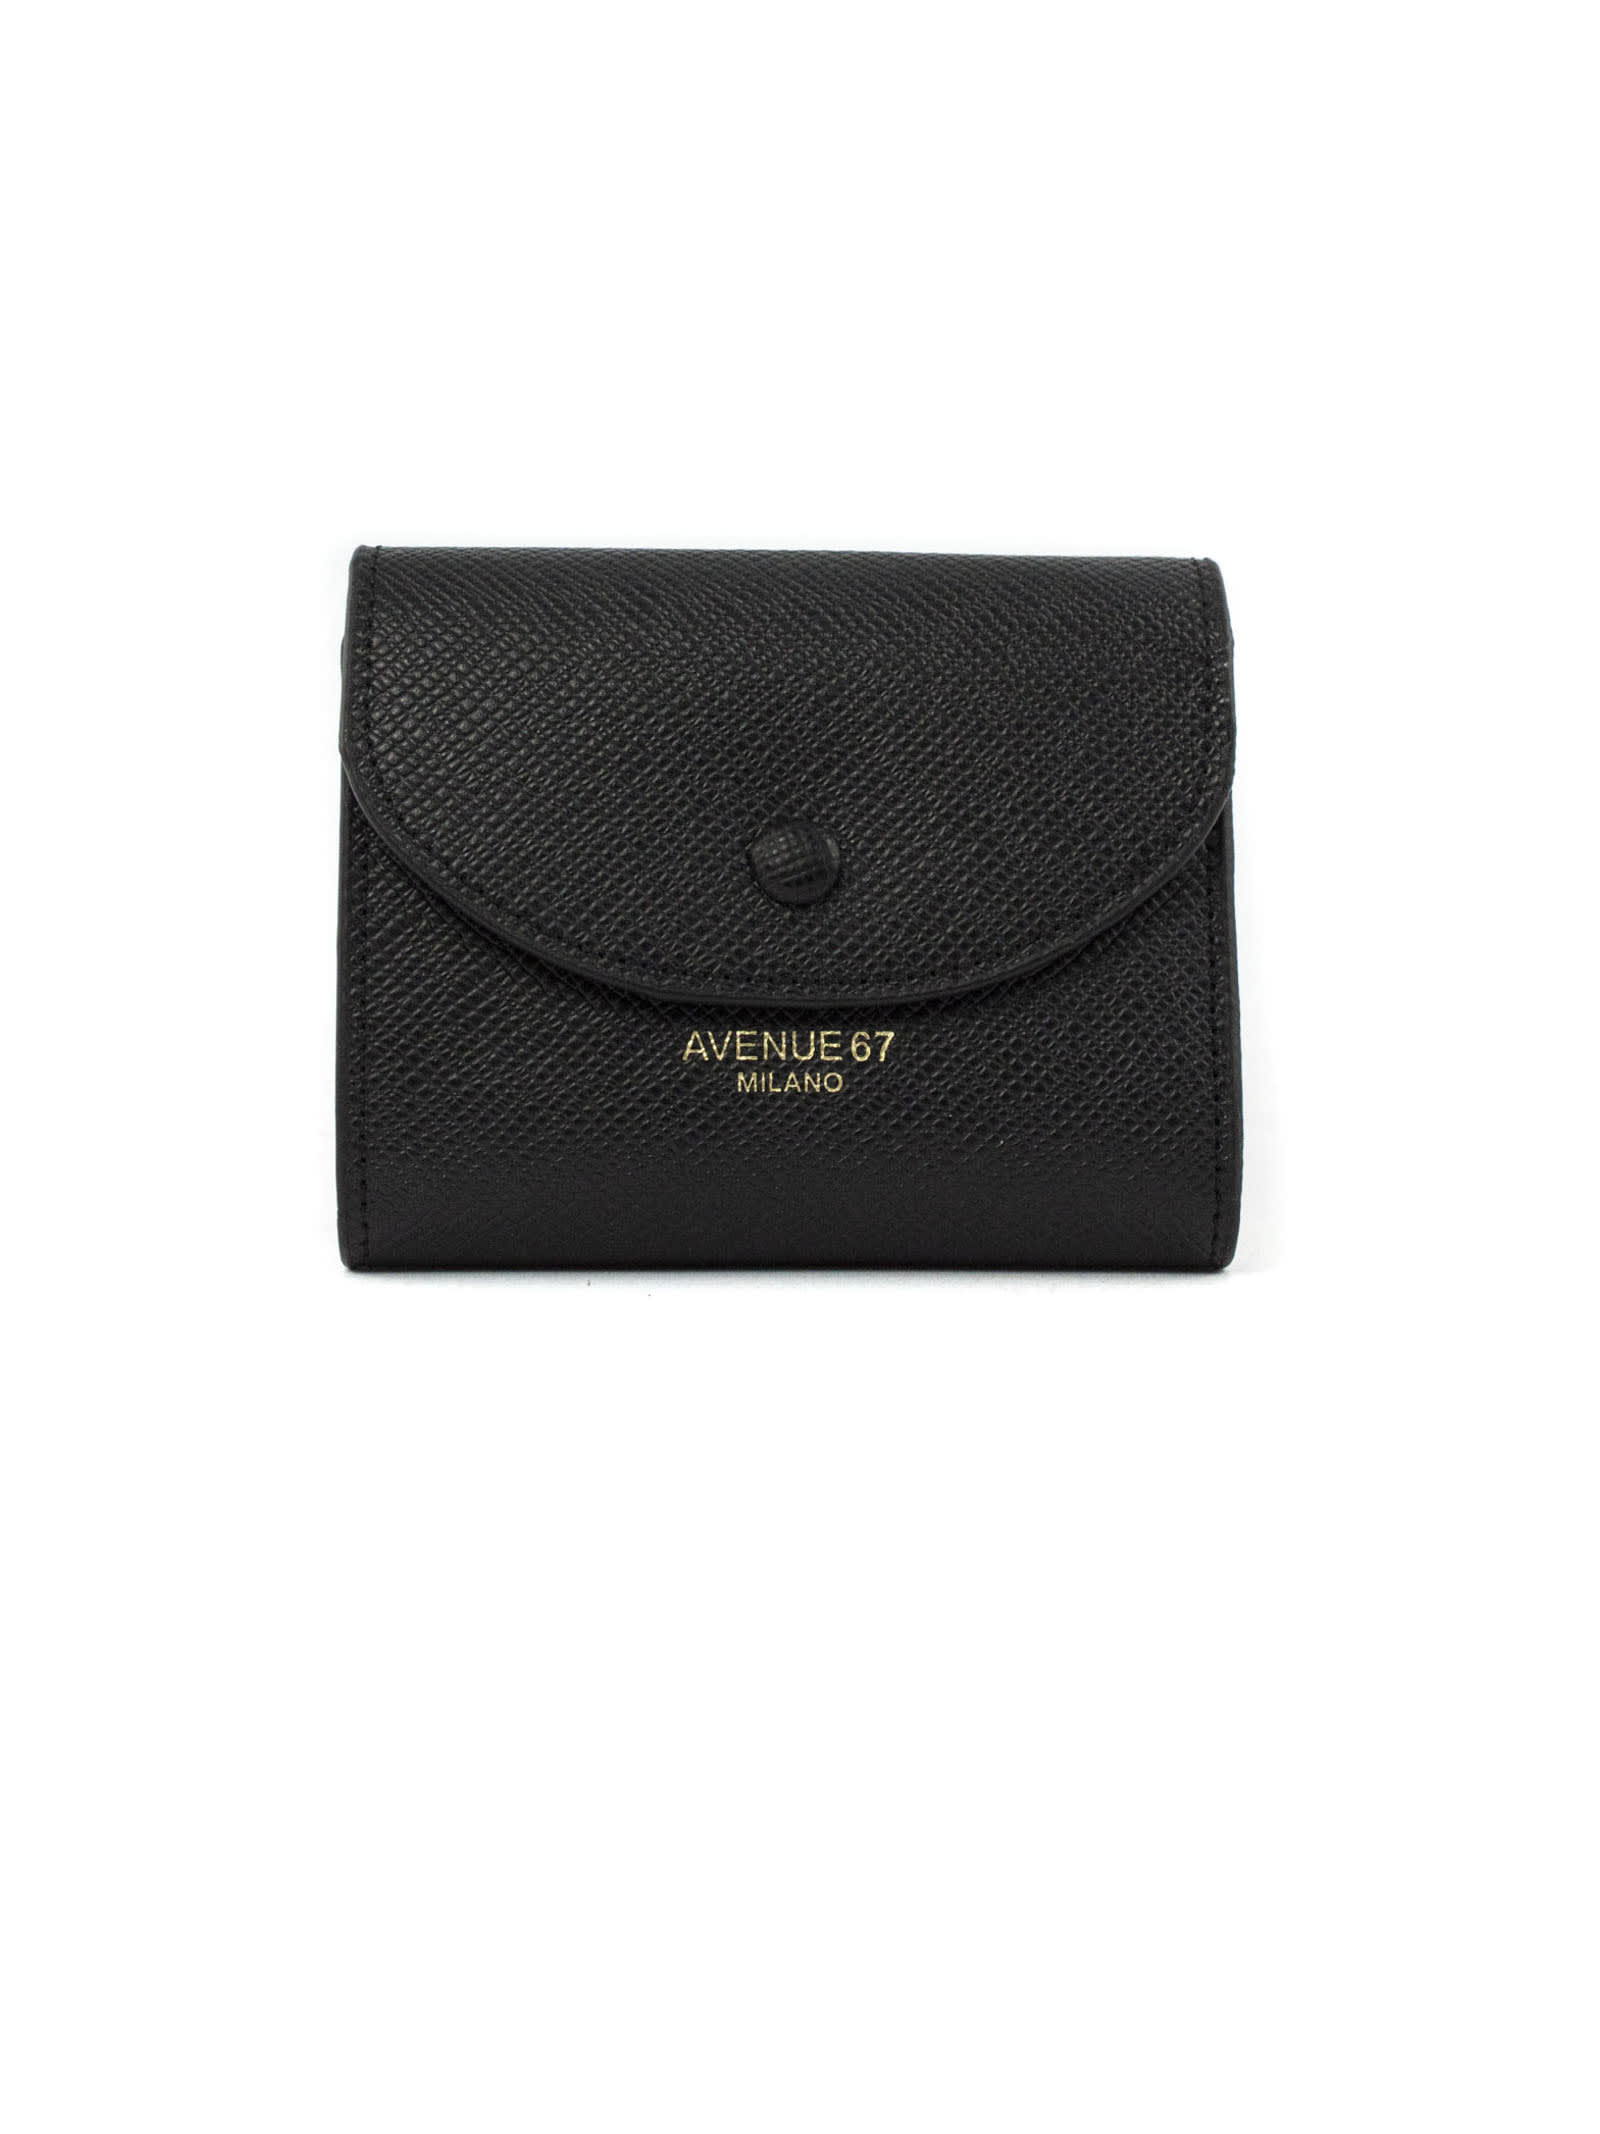 Avenue 67 Black Leather Mini Wallet